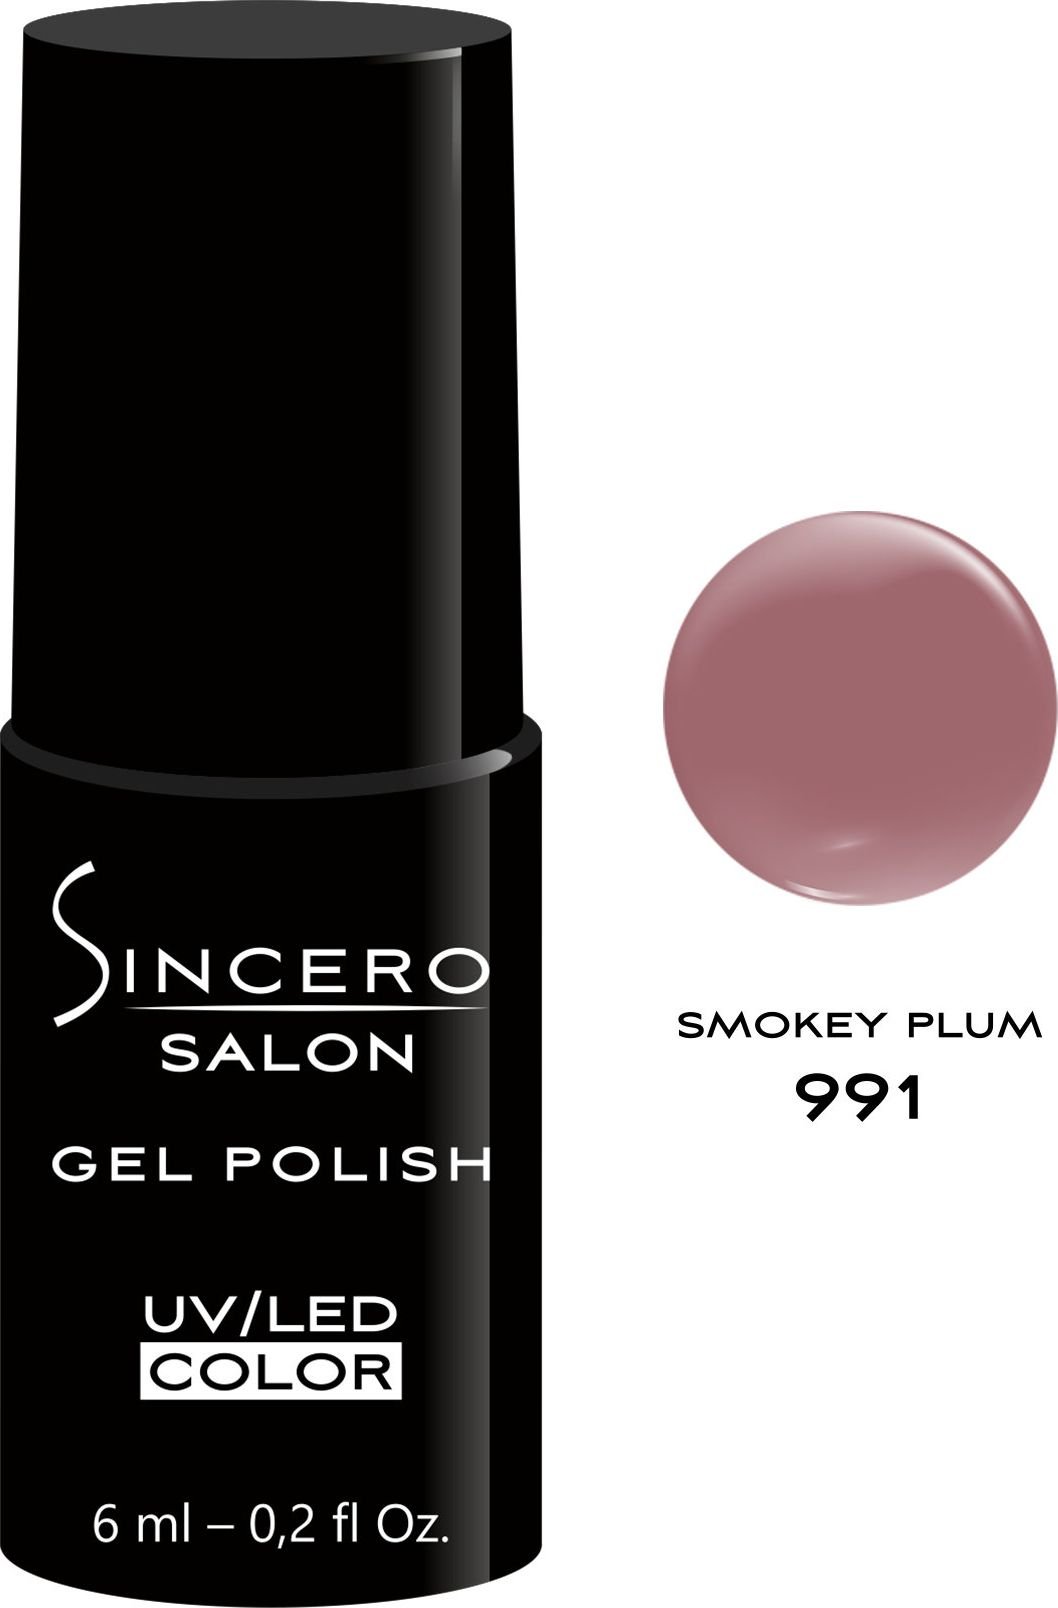 Sincero Salon Gel Polish UV/LED 991 Smokey Plum 6ml